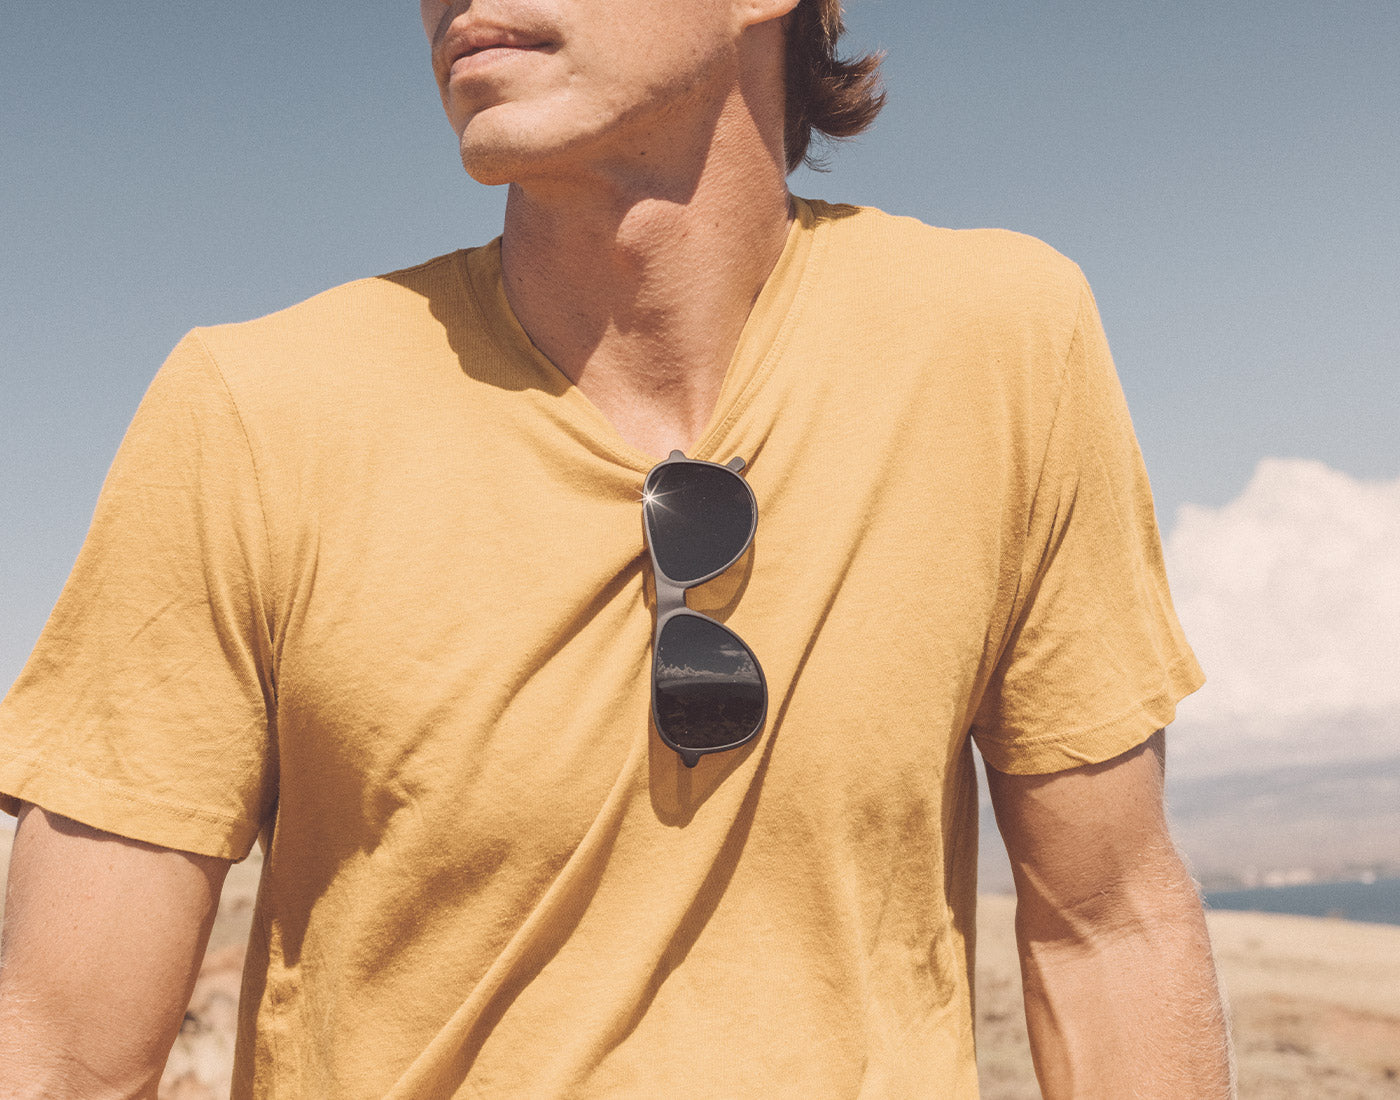 person with sunski foxtrot sunglasses haging on shirt collar